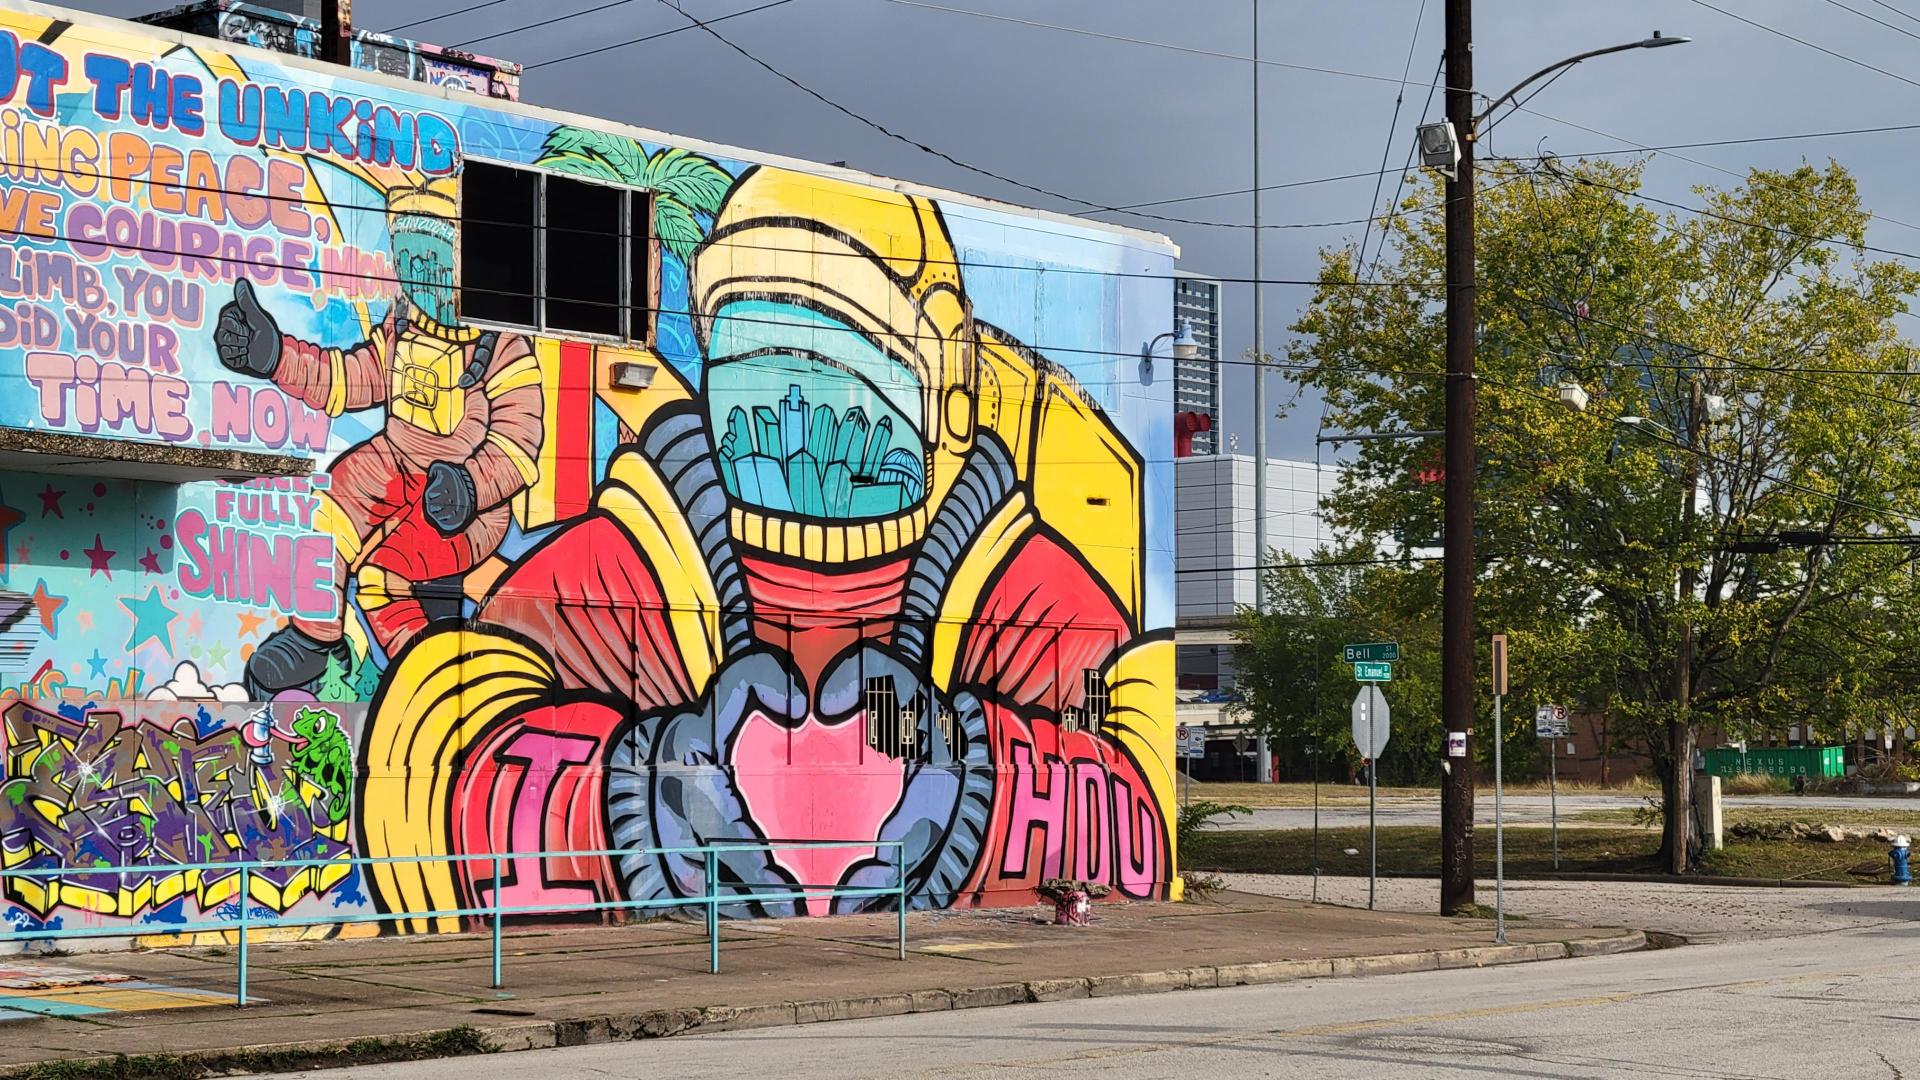 I love Hou mural at Houston's graffiti park